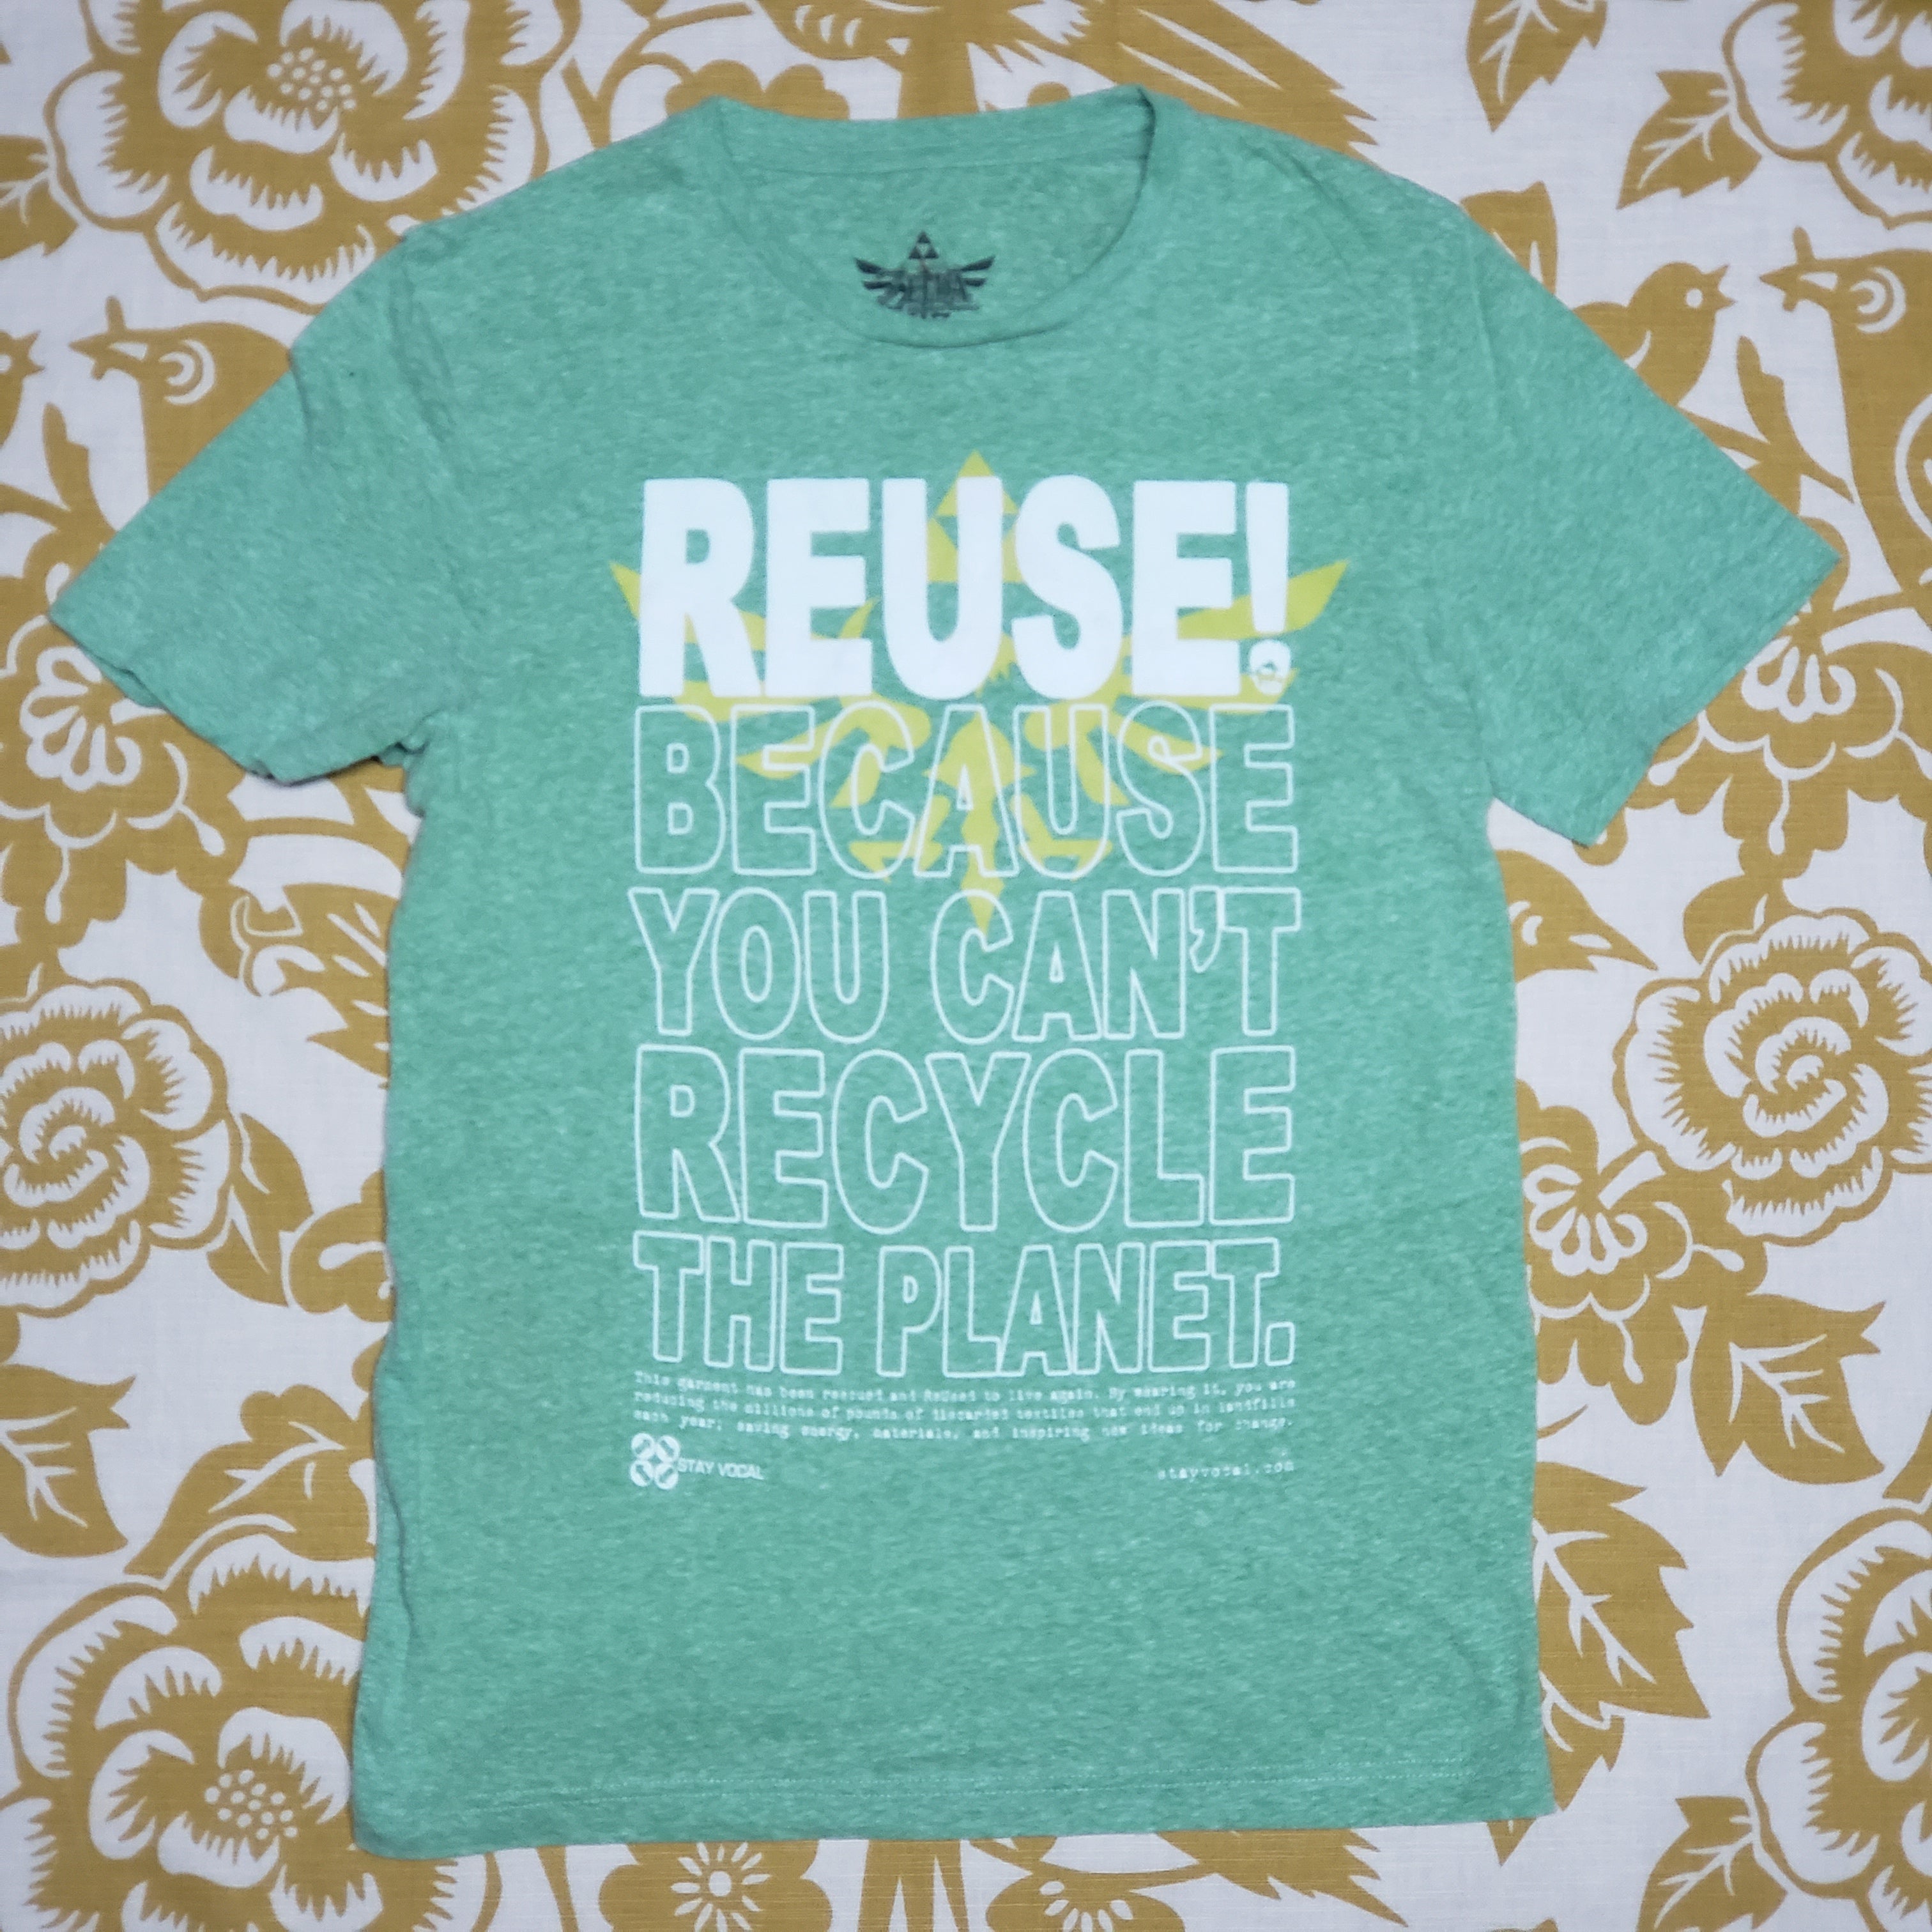 One of a Kind (Men's S) Legend of REUSE! Legend of Zelda Bird T-Shirt